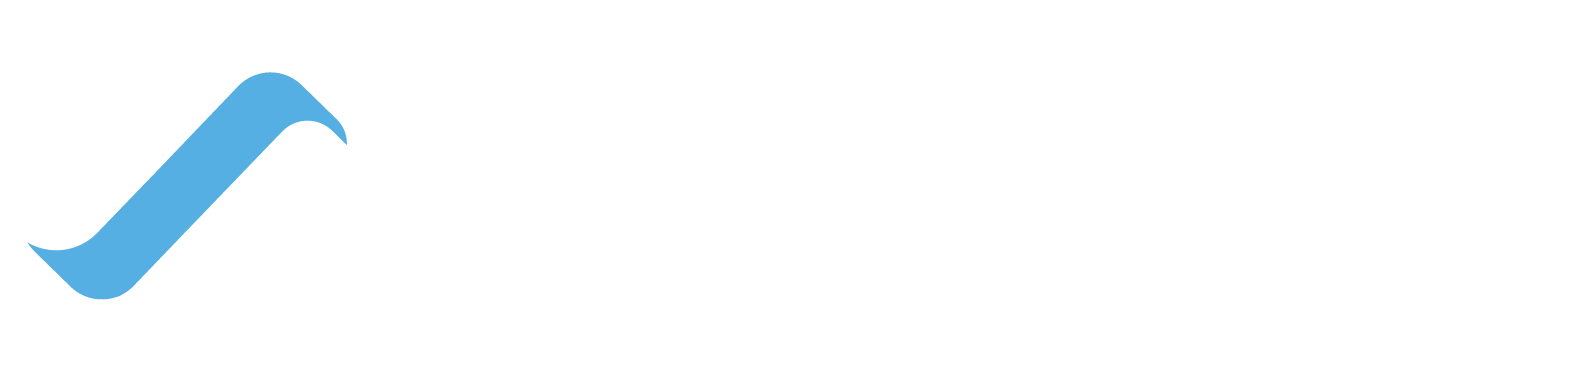 Pharming Group logo grand pour les fonds sombres (PNG transparent)